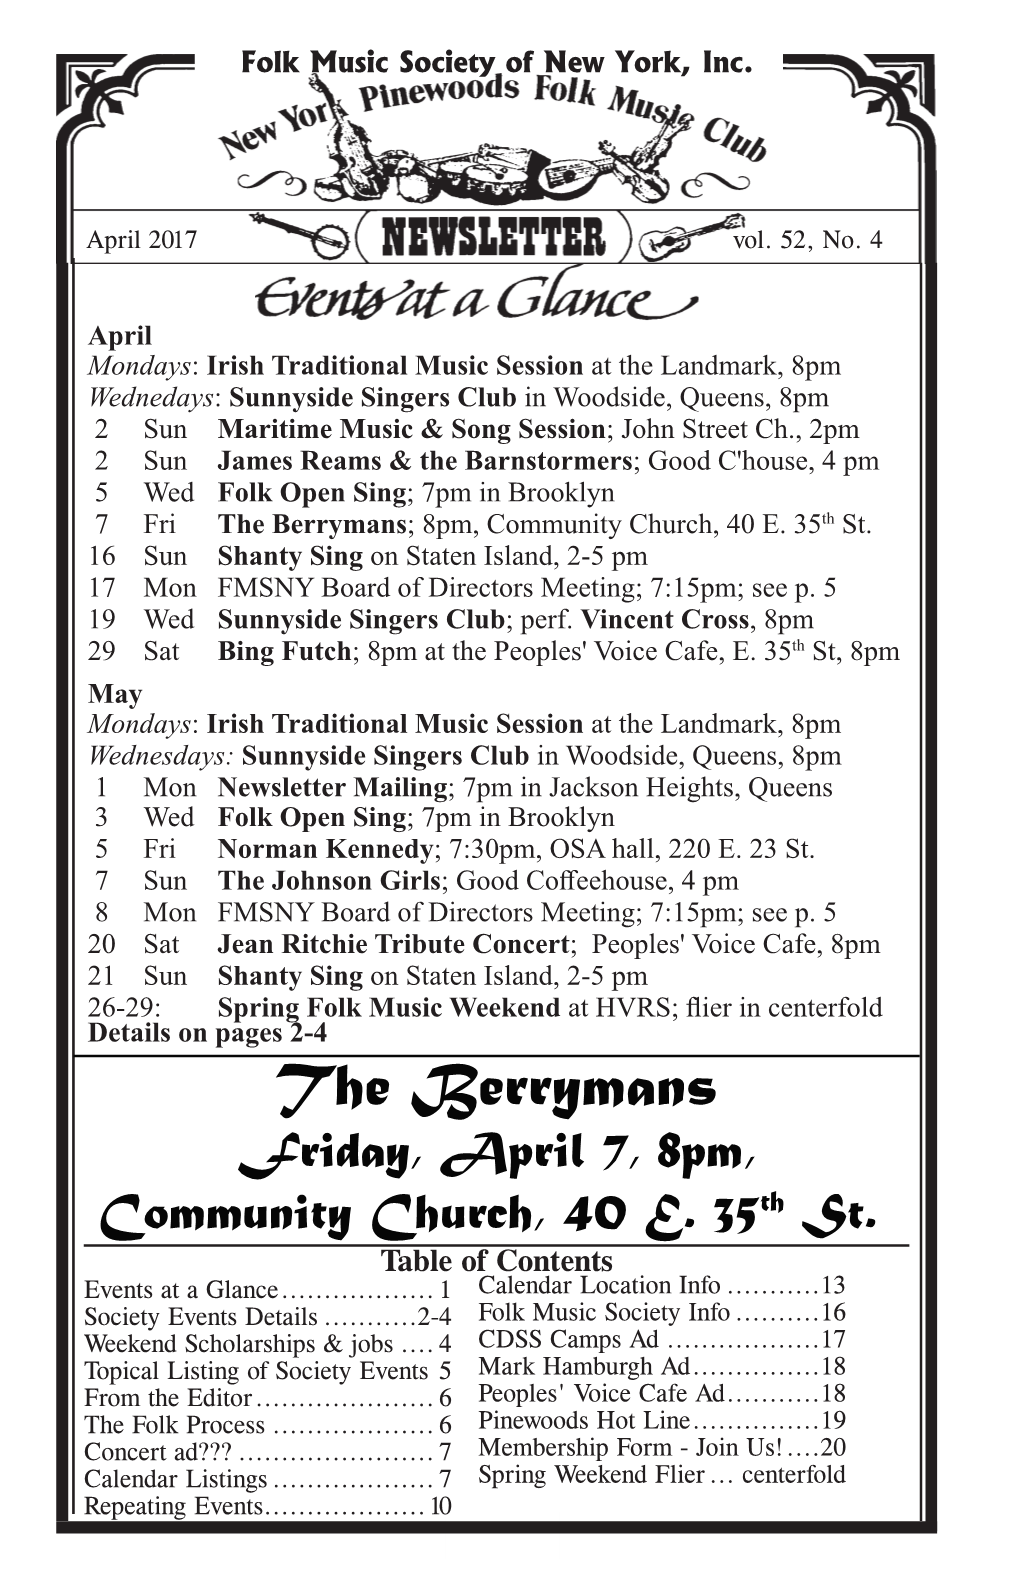 The Berrymans; 8Pm, Community Church, 40 E